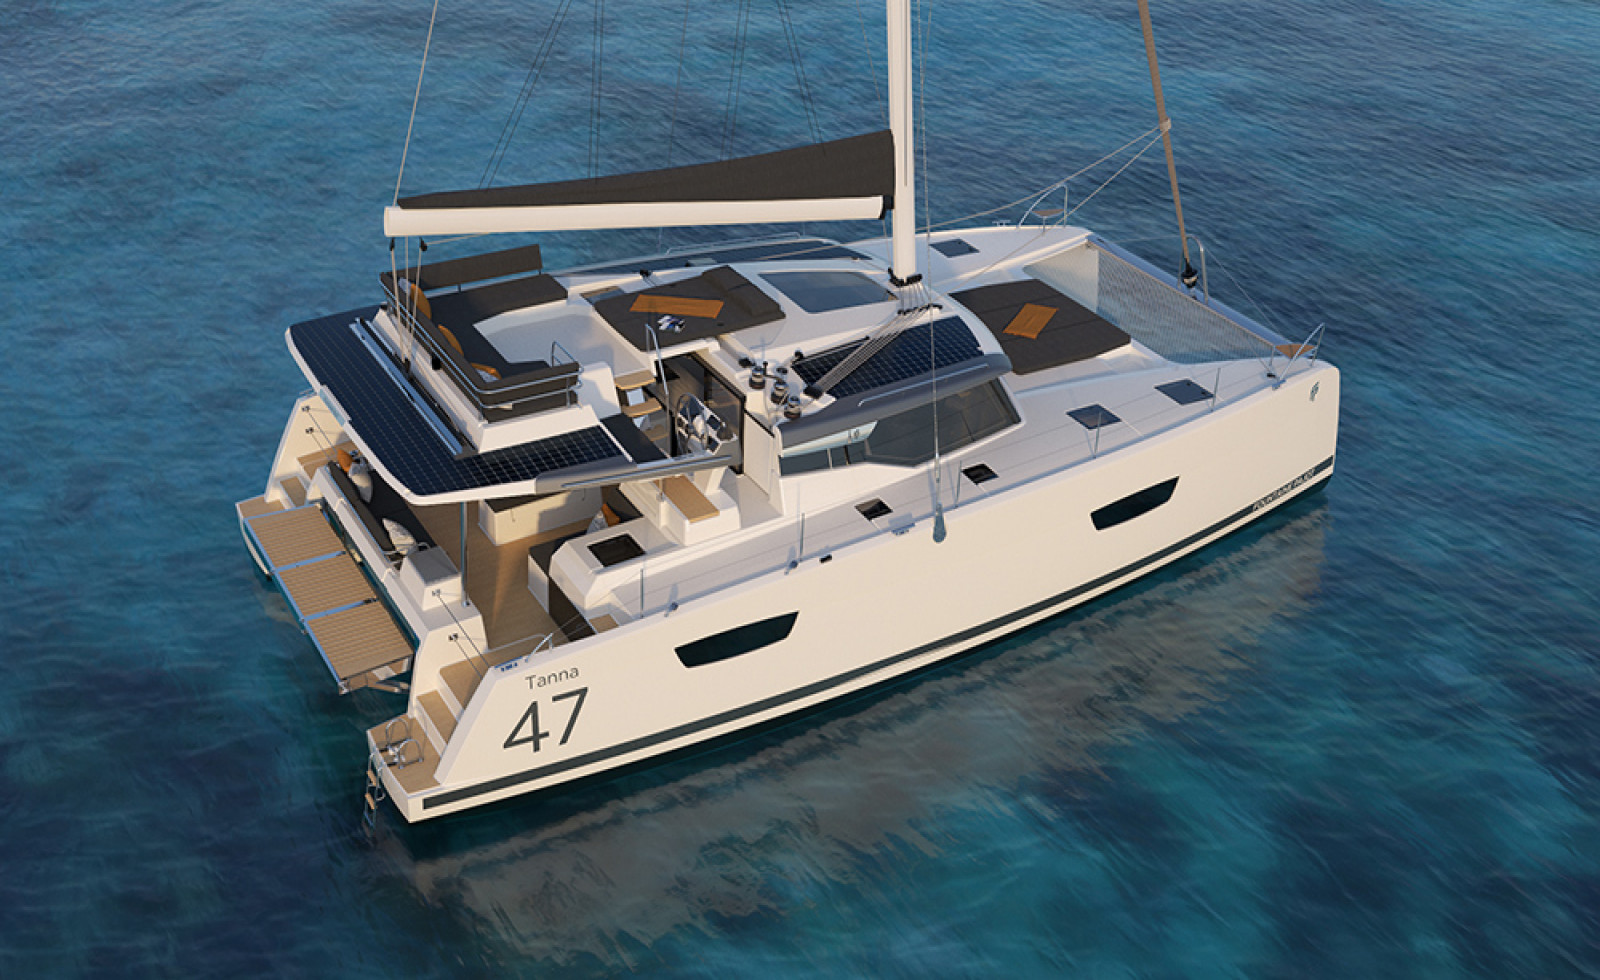 Catamaran Tanna 47 – A sophisticated new sailboat